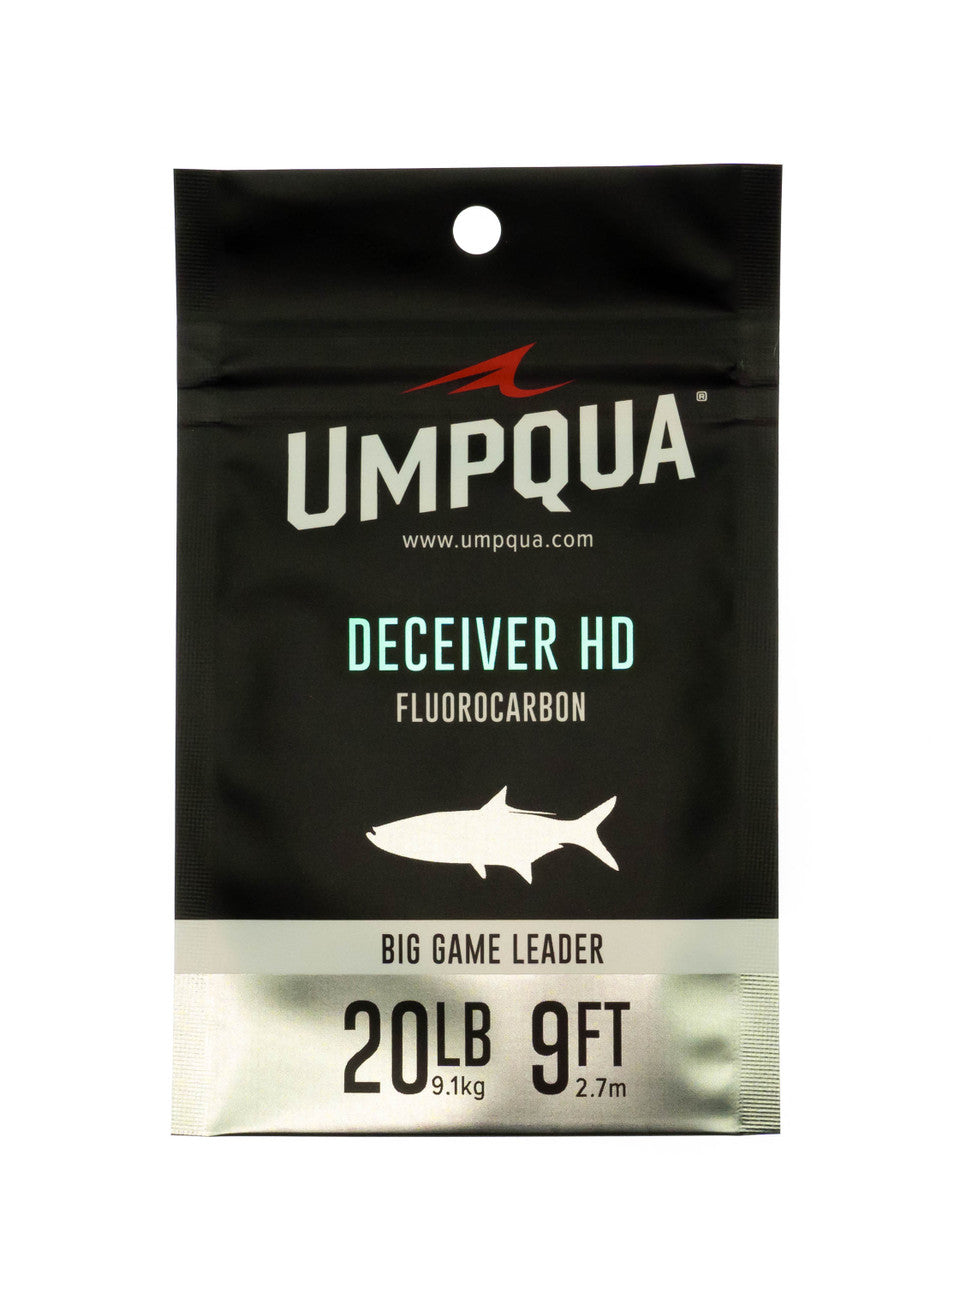 Umpqua Deceiver HD Fluorocarbon 12' Leader